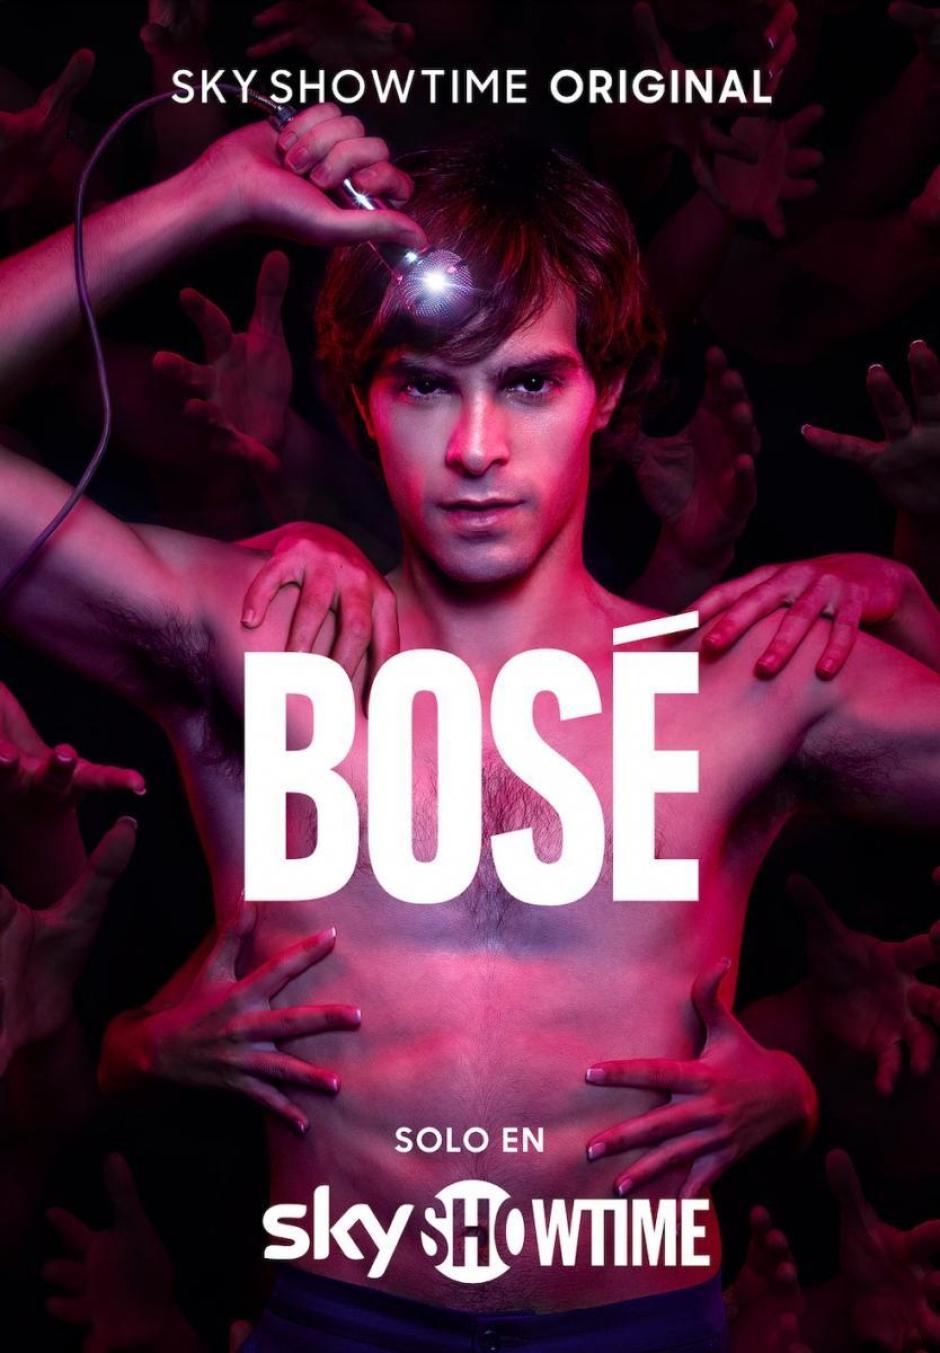 Cartel de la miniserie sobre Miguel Bosé, 'Bosé'